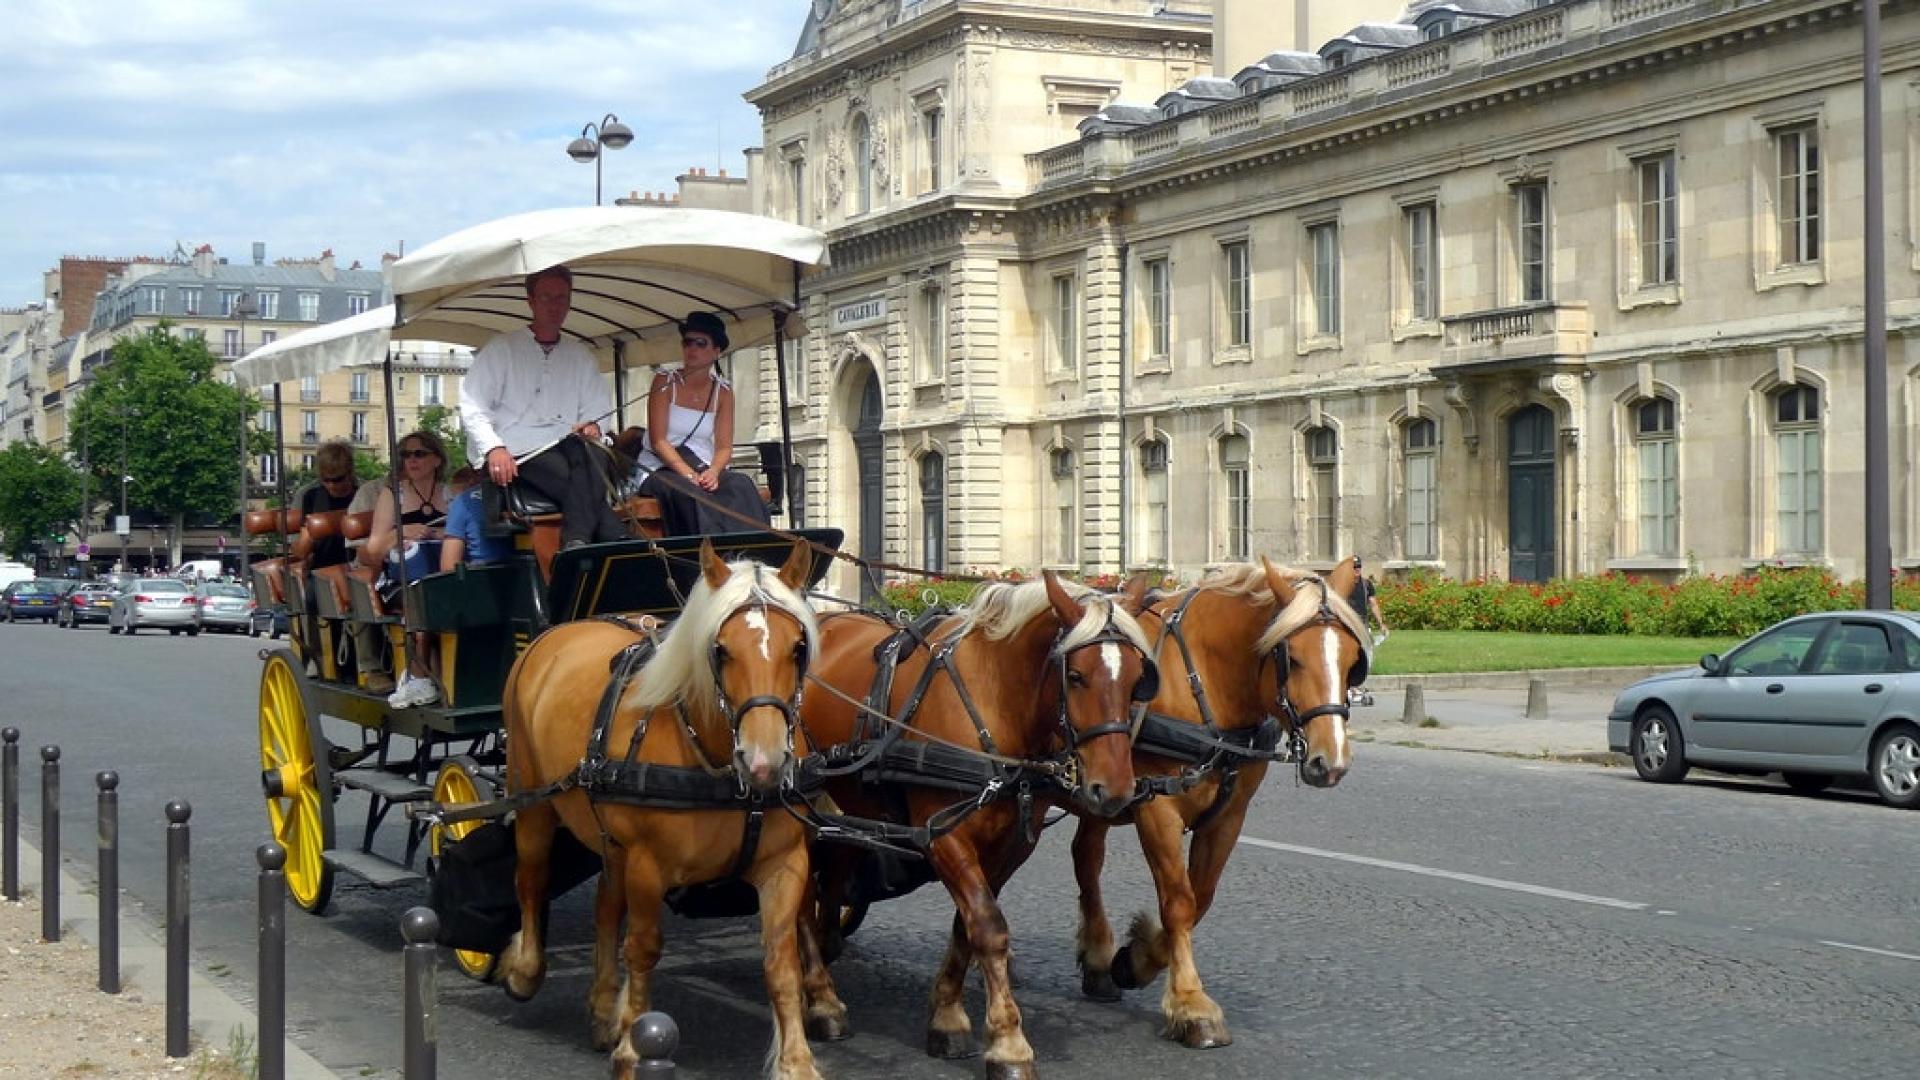 Paris by horse-drawn carriage; take a timeless ride